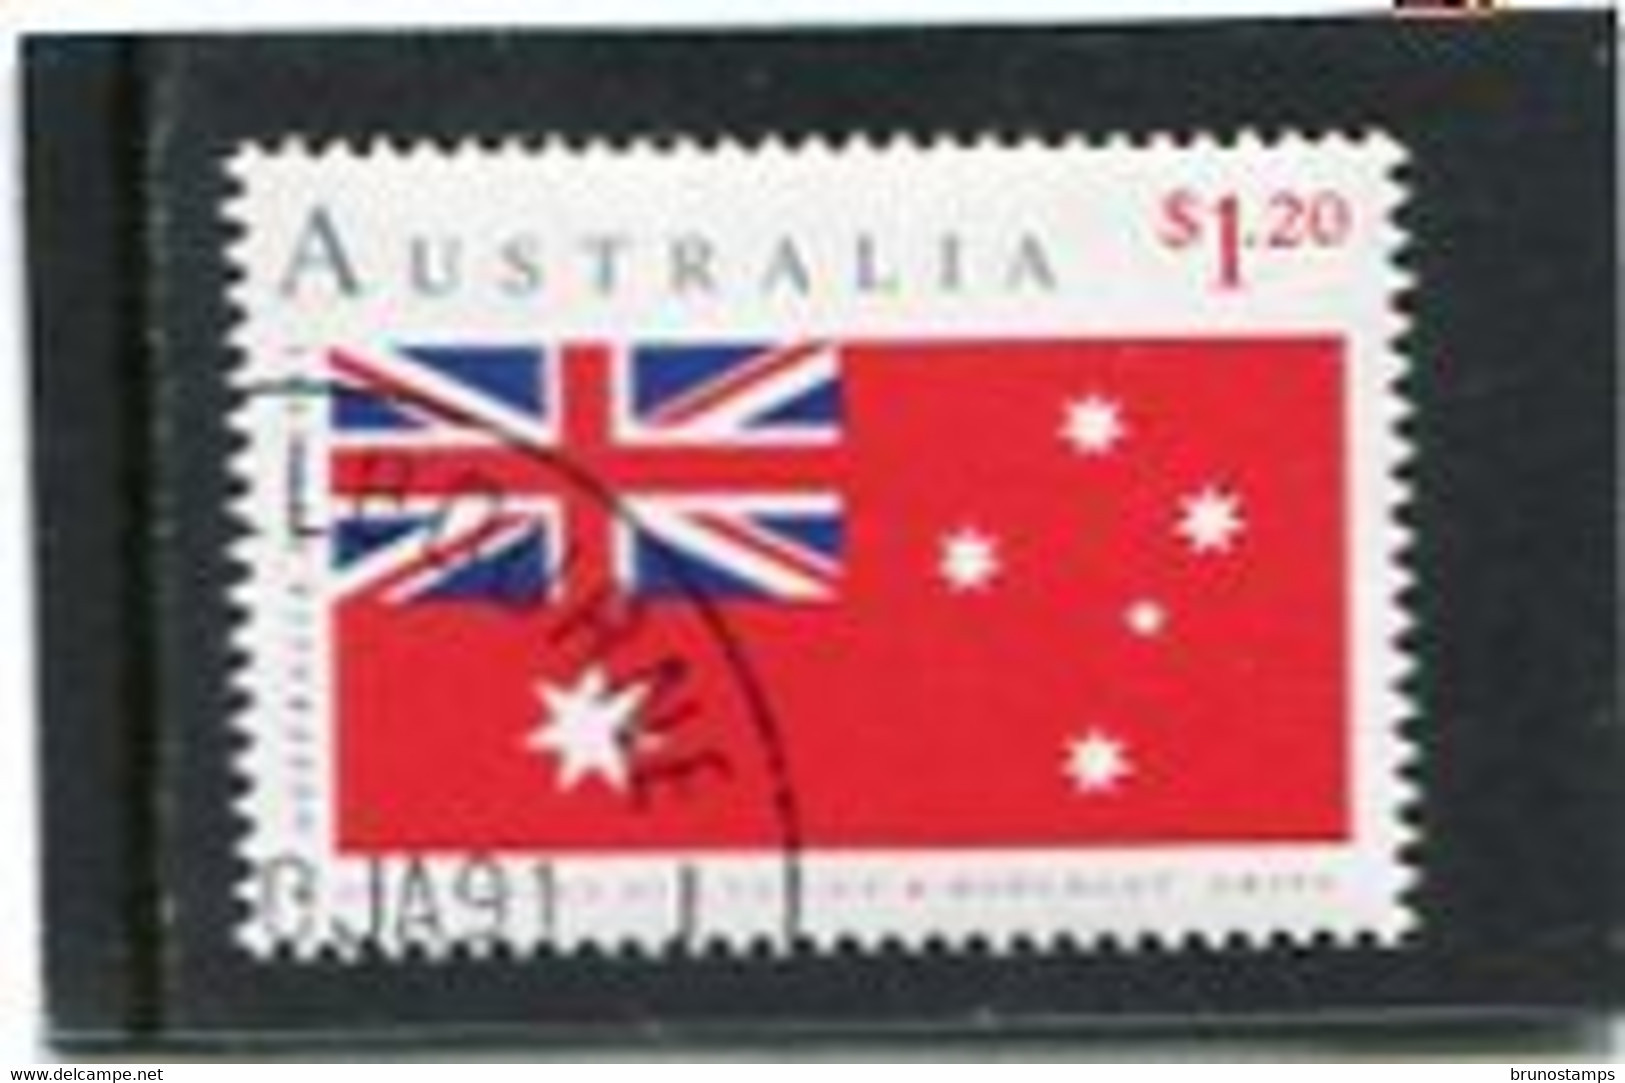 AUSTRALIA - 1991  1.20 $  AUSTRALIA DAY  FINE USED - Gebraucht